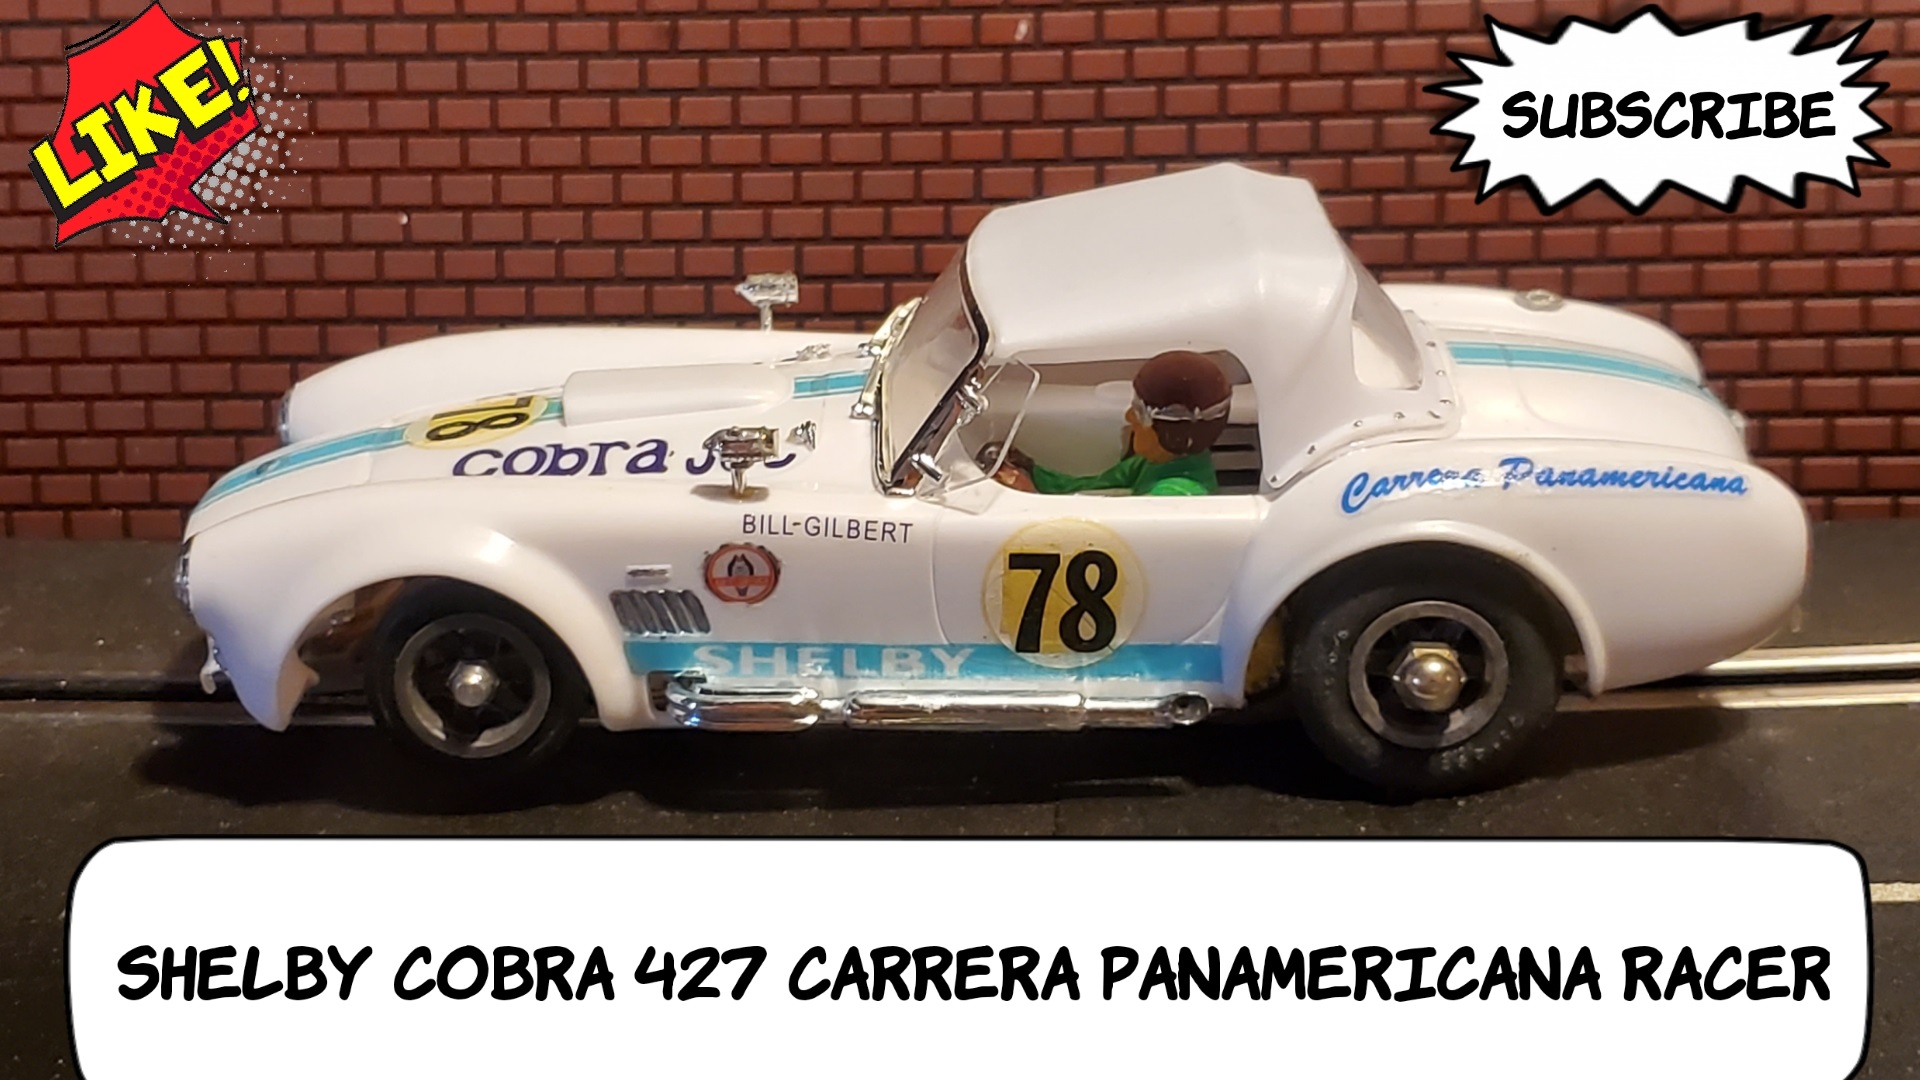 * SALE * Shelby Cobra 🐍 427 Cobra Jet "Carrera Panamericana" Racer 1:24 Scale Slot Car #78